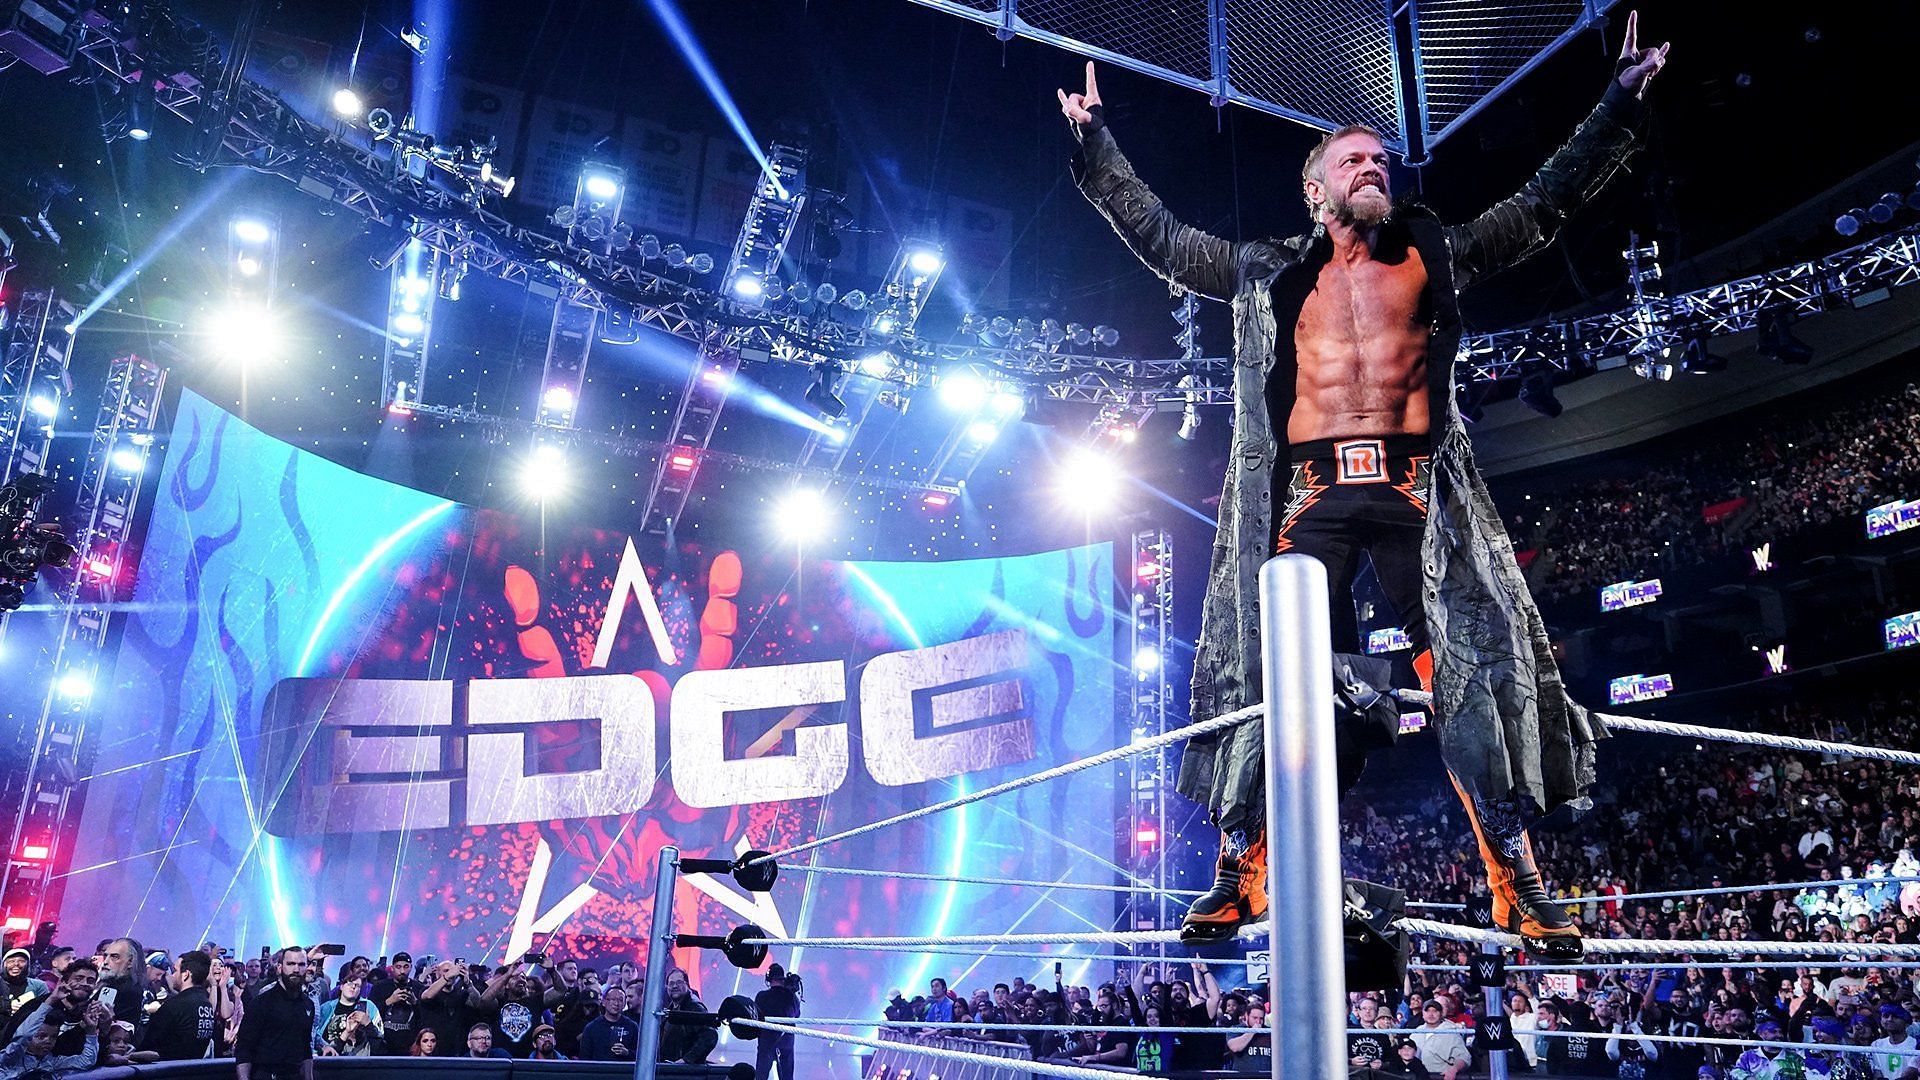 Edge won the Royal Rumble